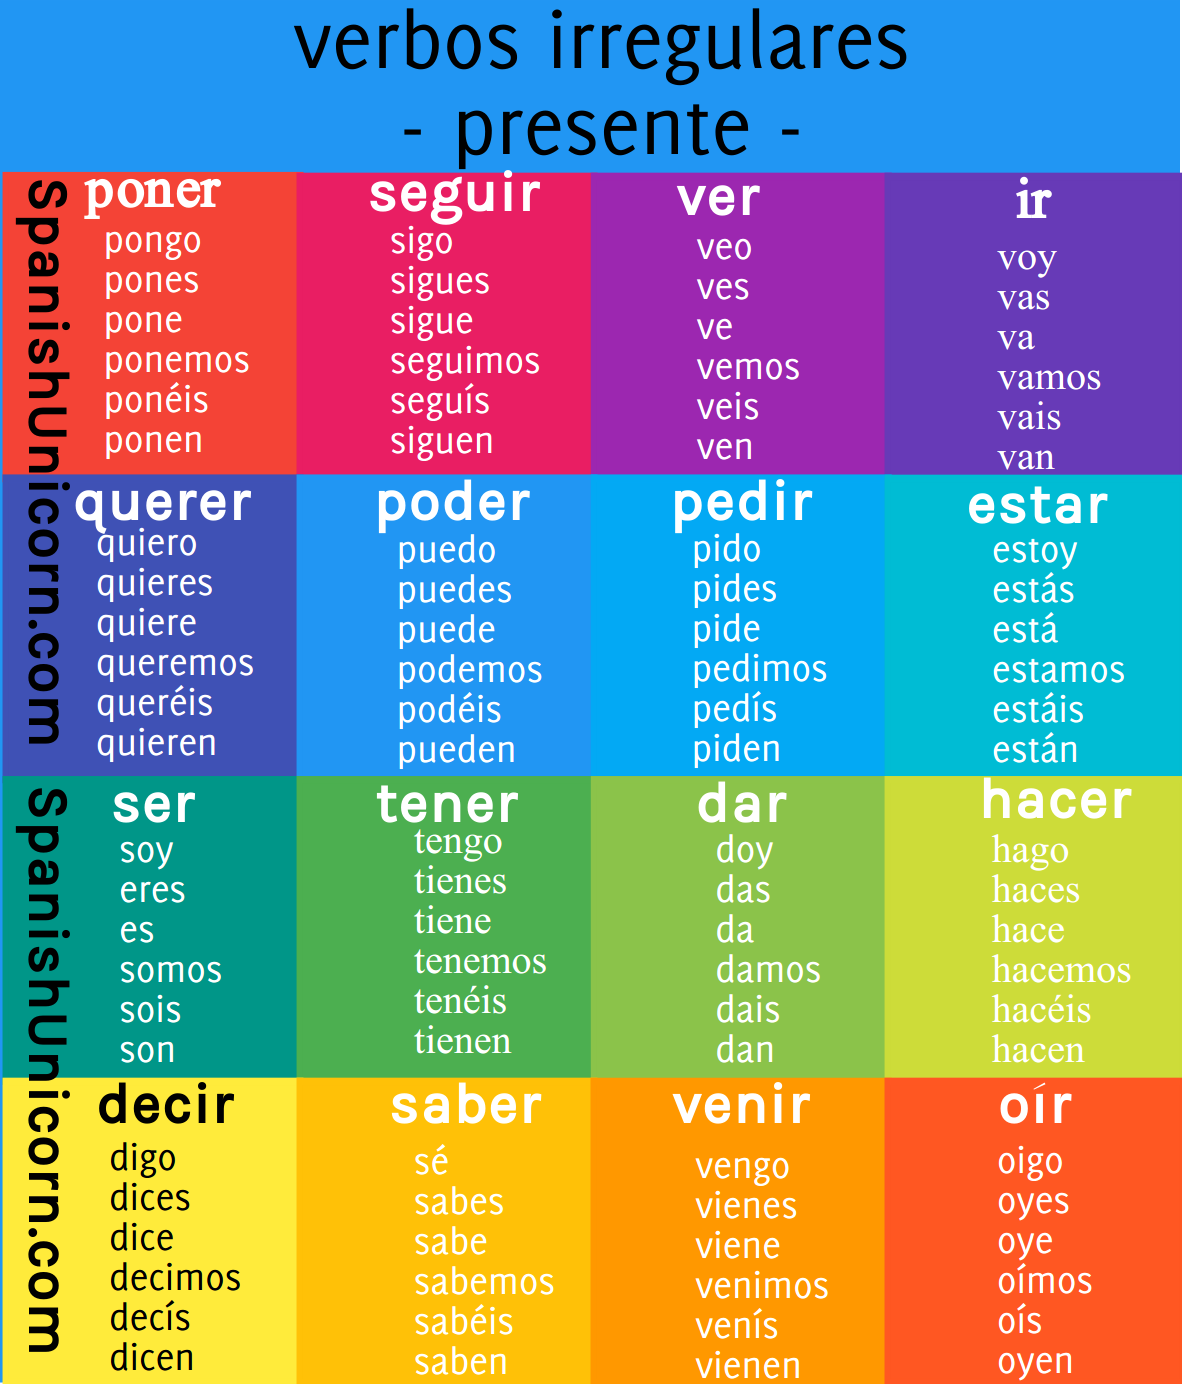 verbos-irregulares-en-presente-2-spanish-unicorn